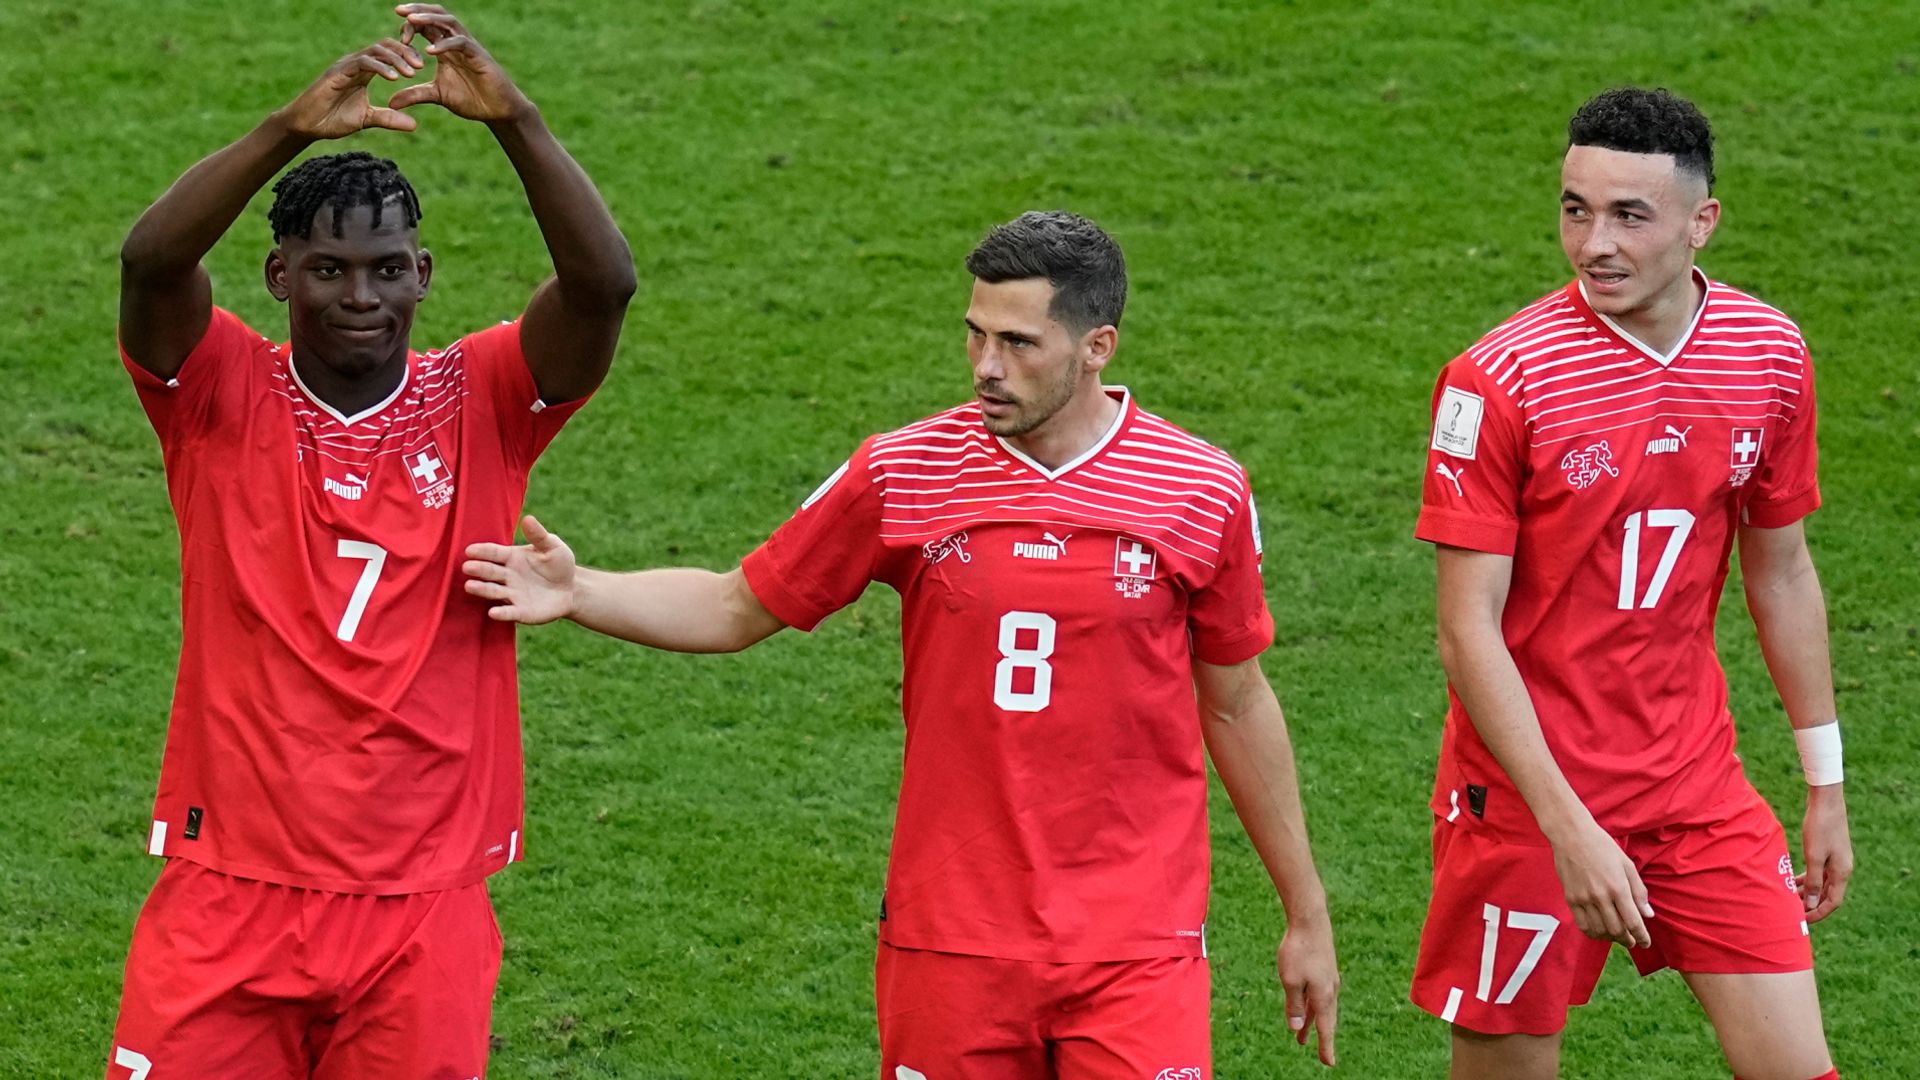 Cameroon-born Embolo breaks hearts by sealing Swiss victory